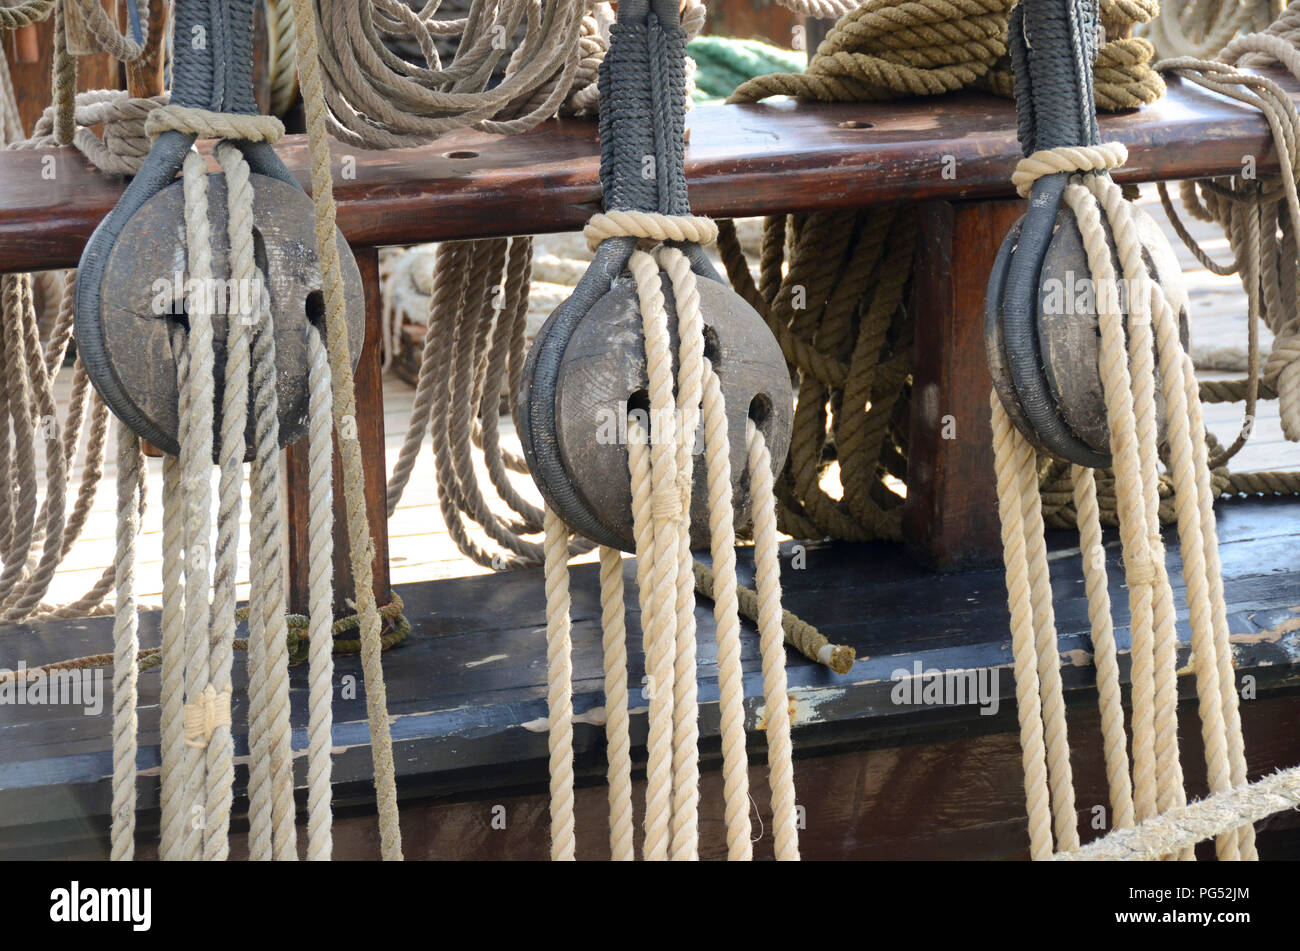 https://c8.alamy.com/comp/PG52JM/old-pulleys-and-ropes-on-an-old-wooden-sailing-ship-PG52JM.jpg